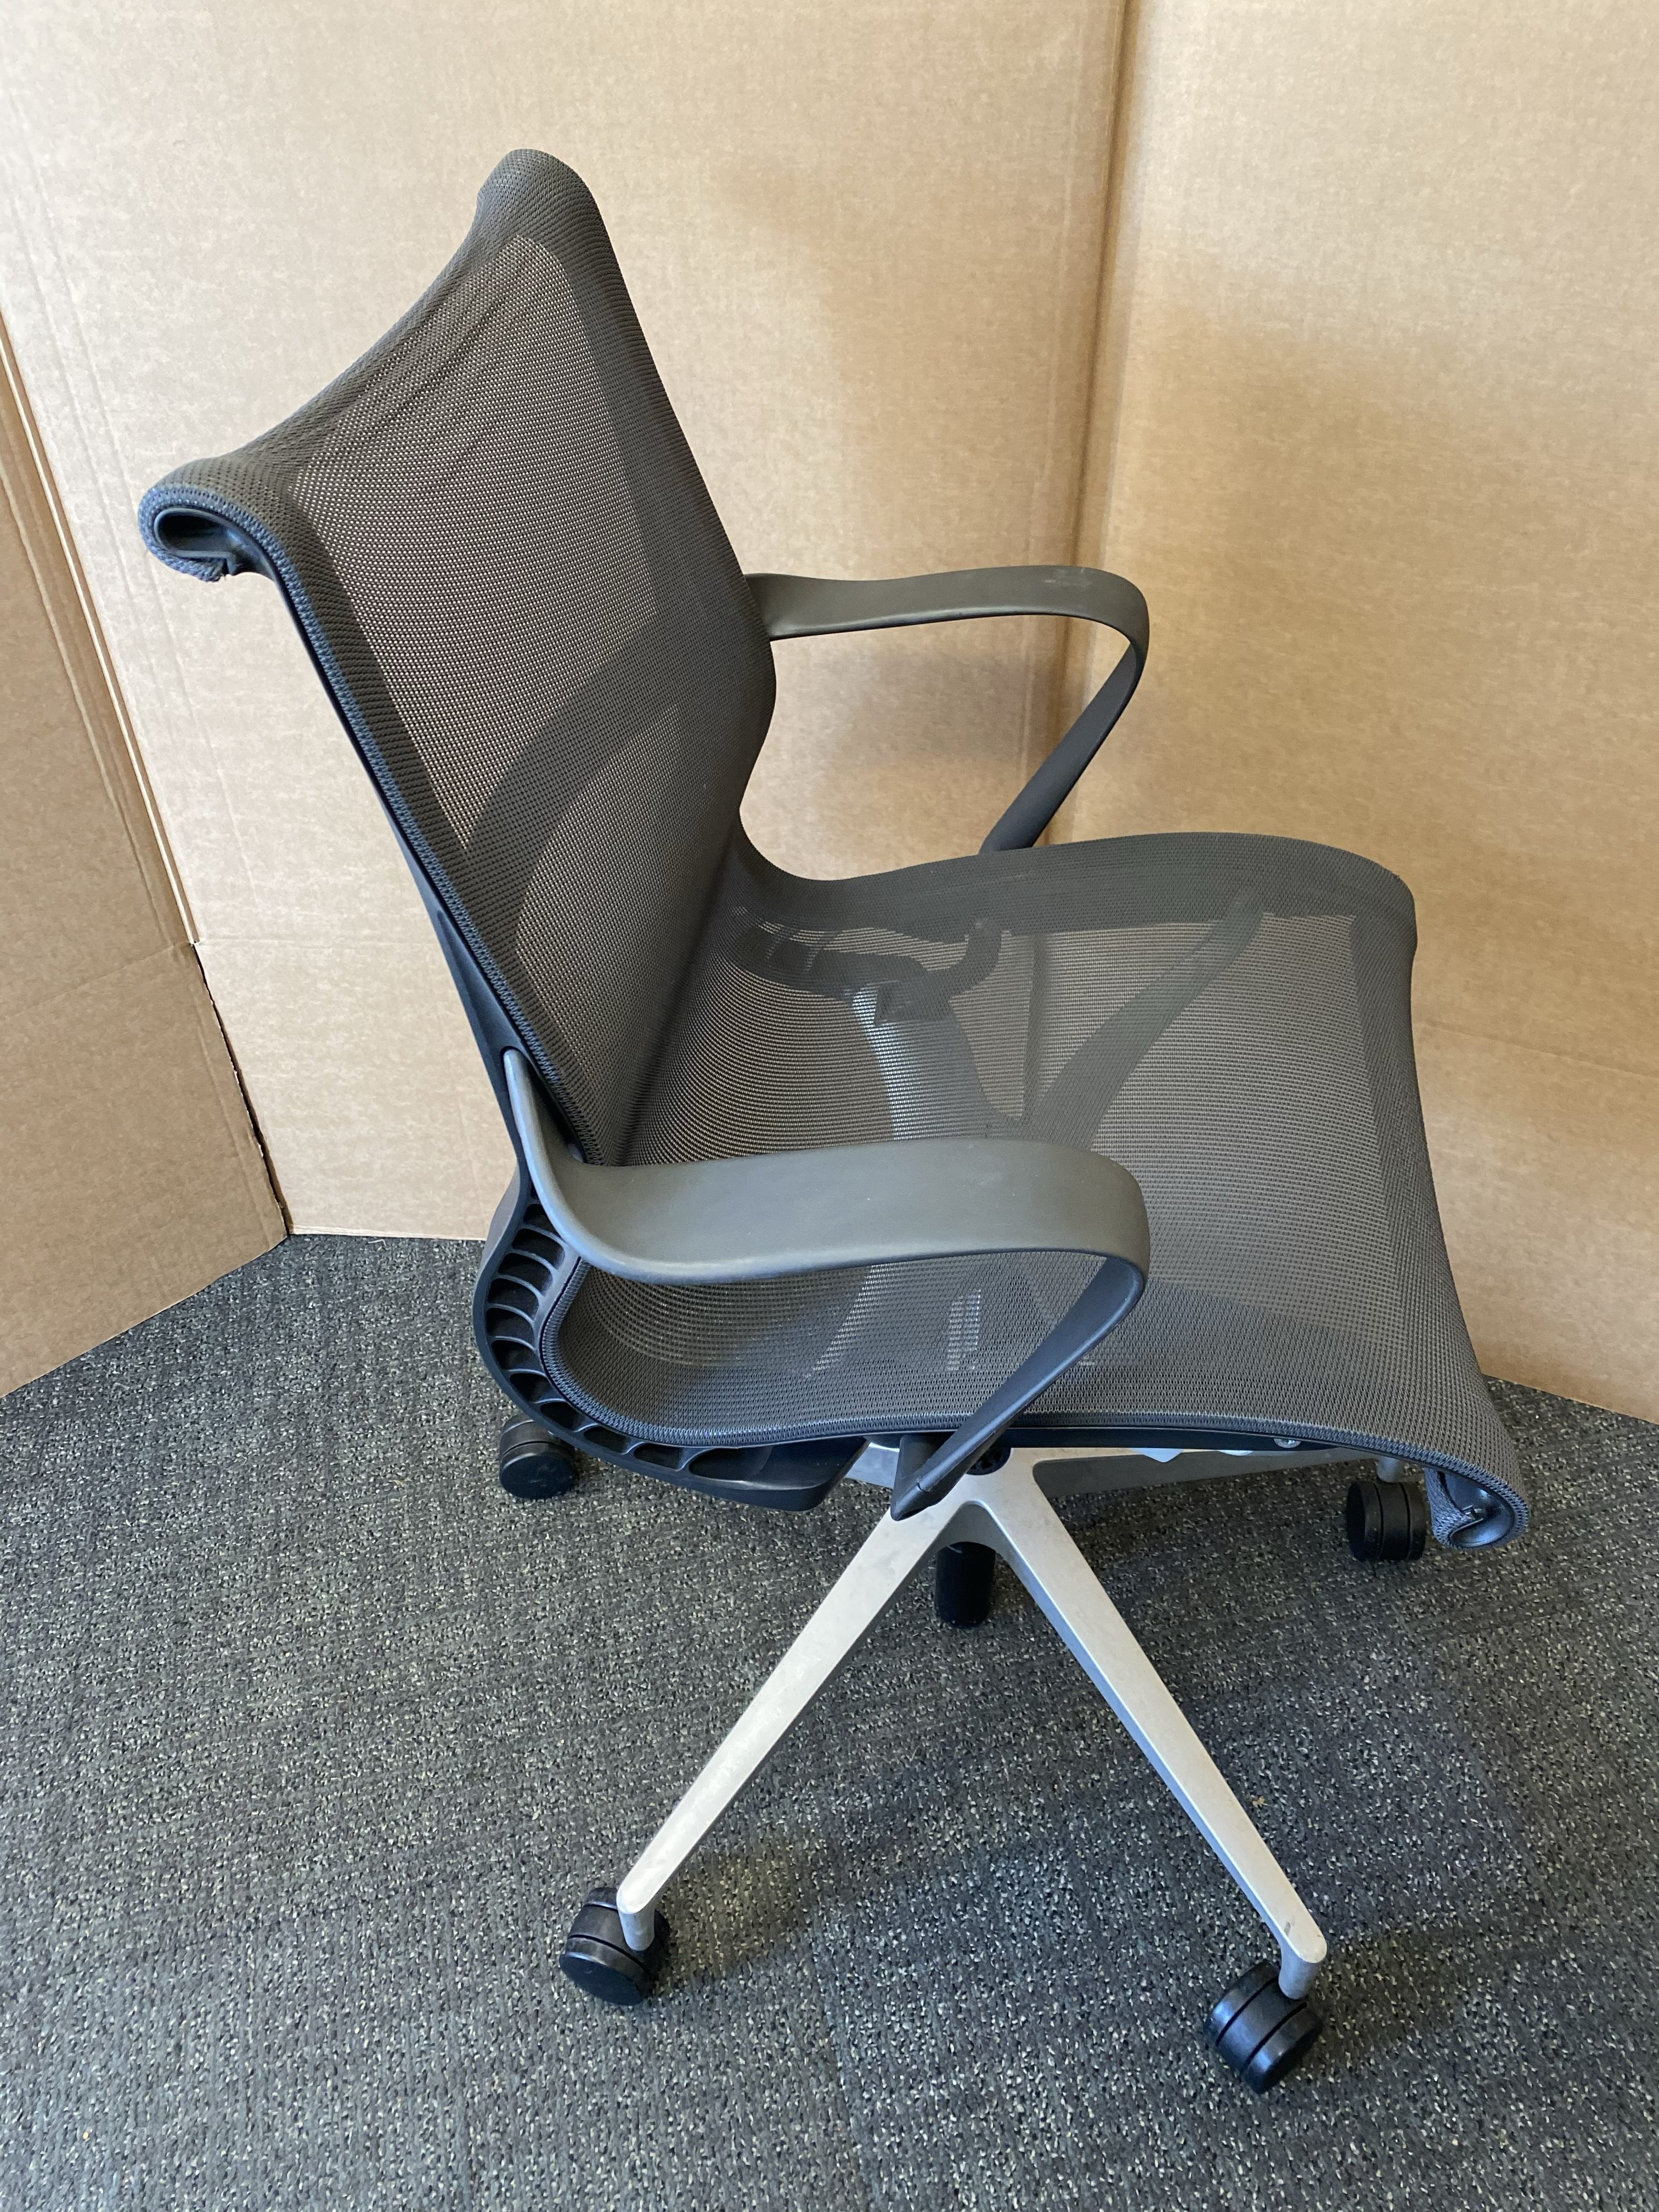 Minimalist Office Chair Ergonomic Herman Miller for Simple Design